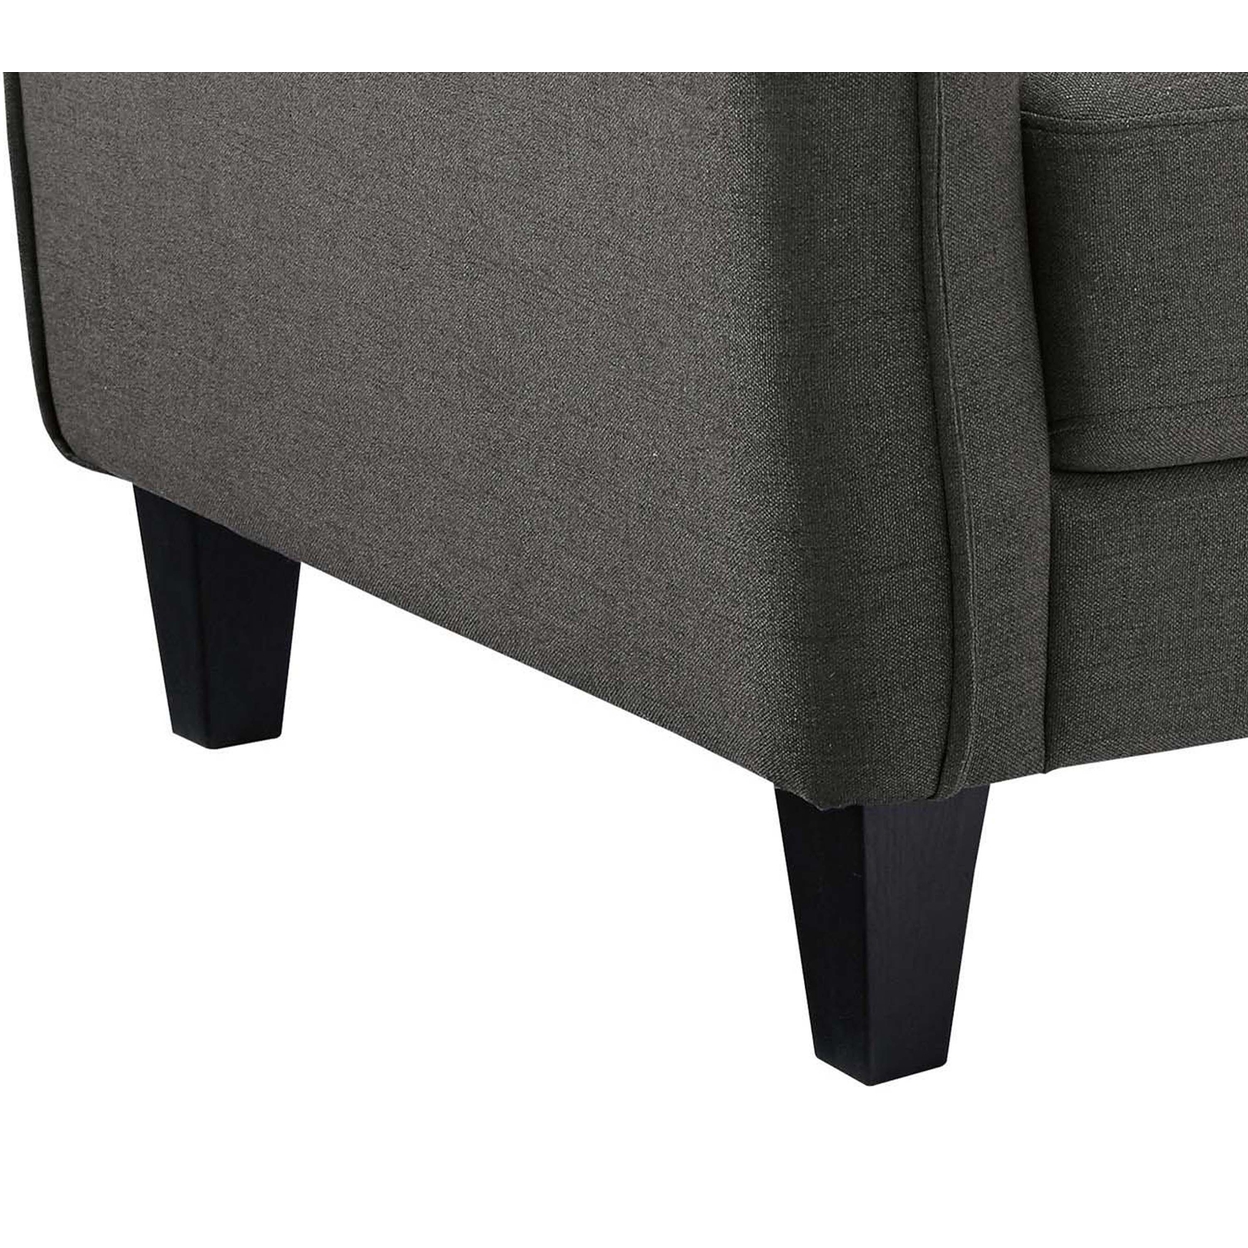 Fabric Upholstered Wooden Chair With Corner Blocked Frame, Gray- Saltoro Sherpi